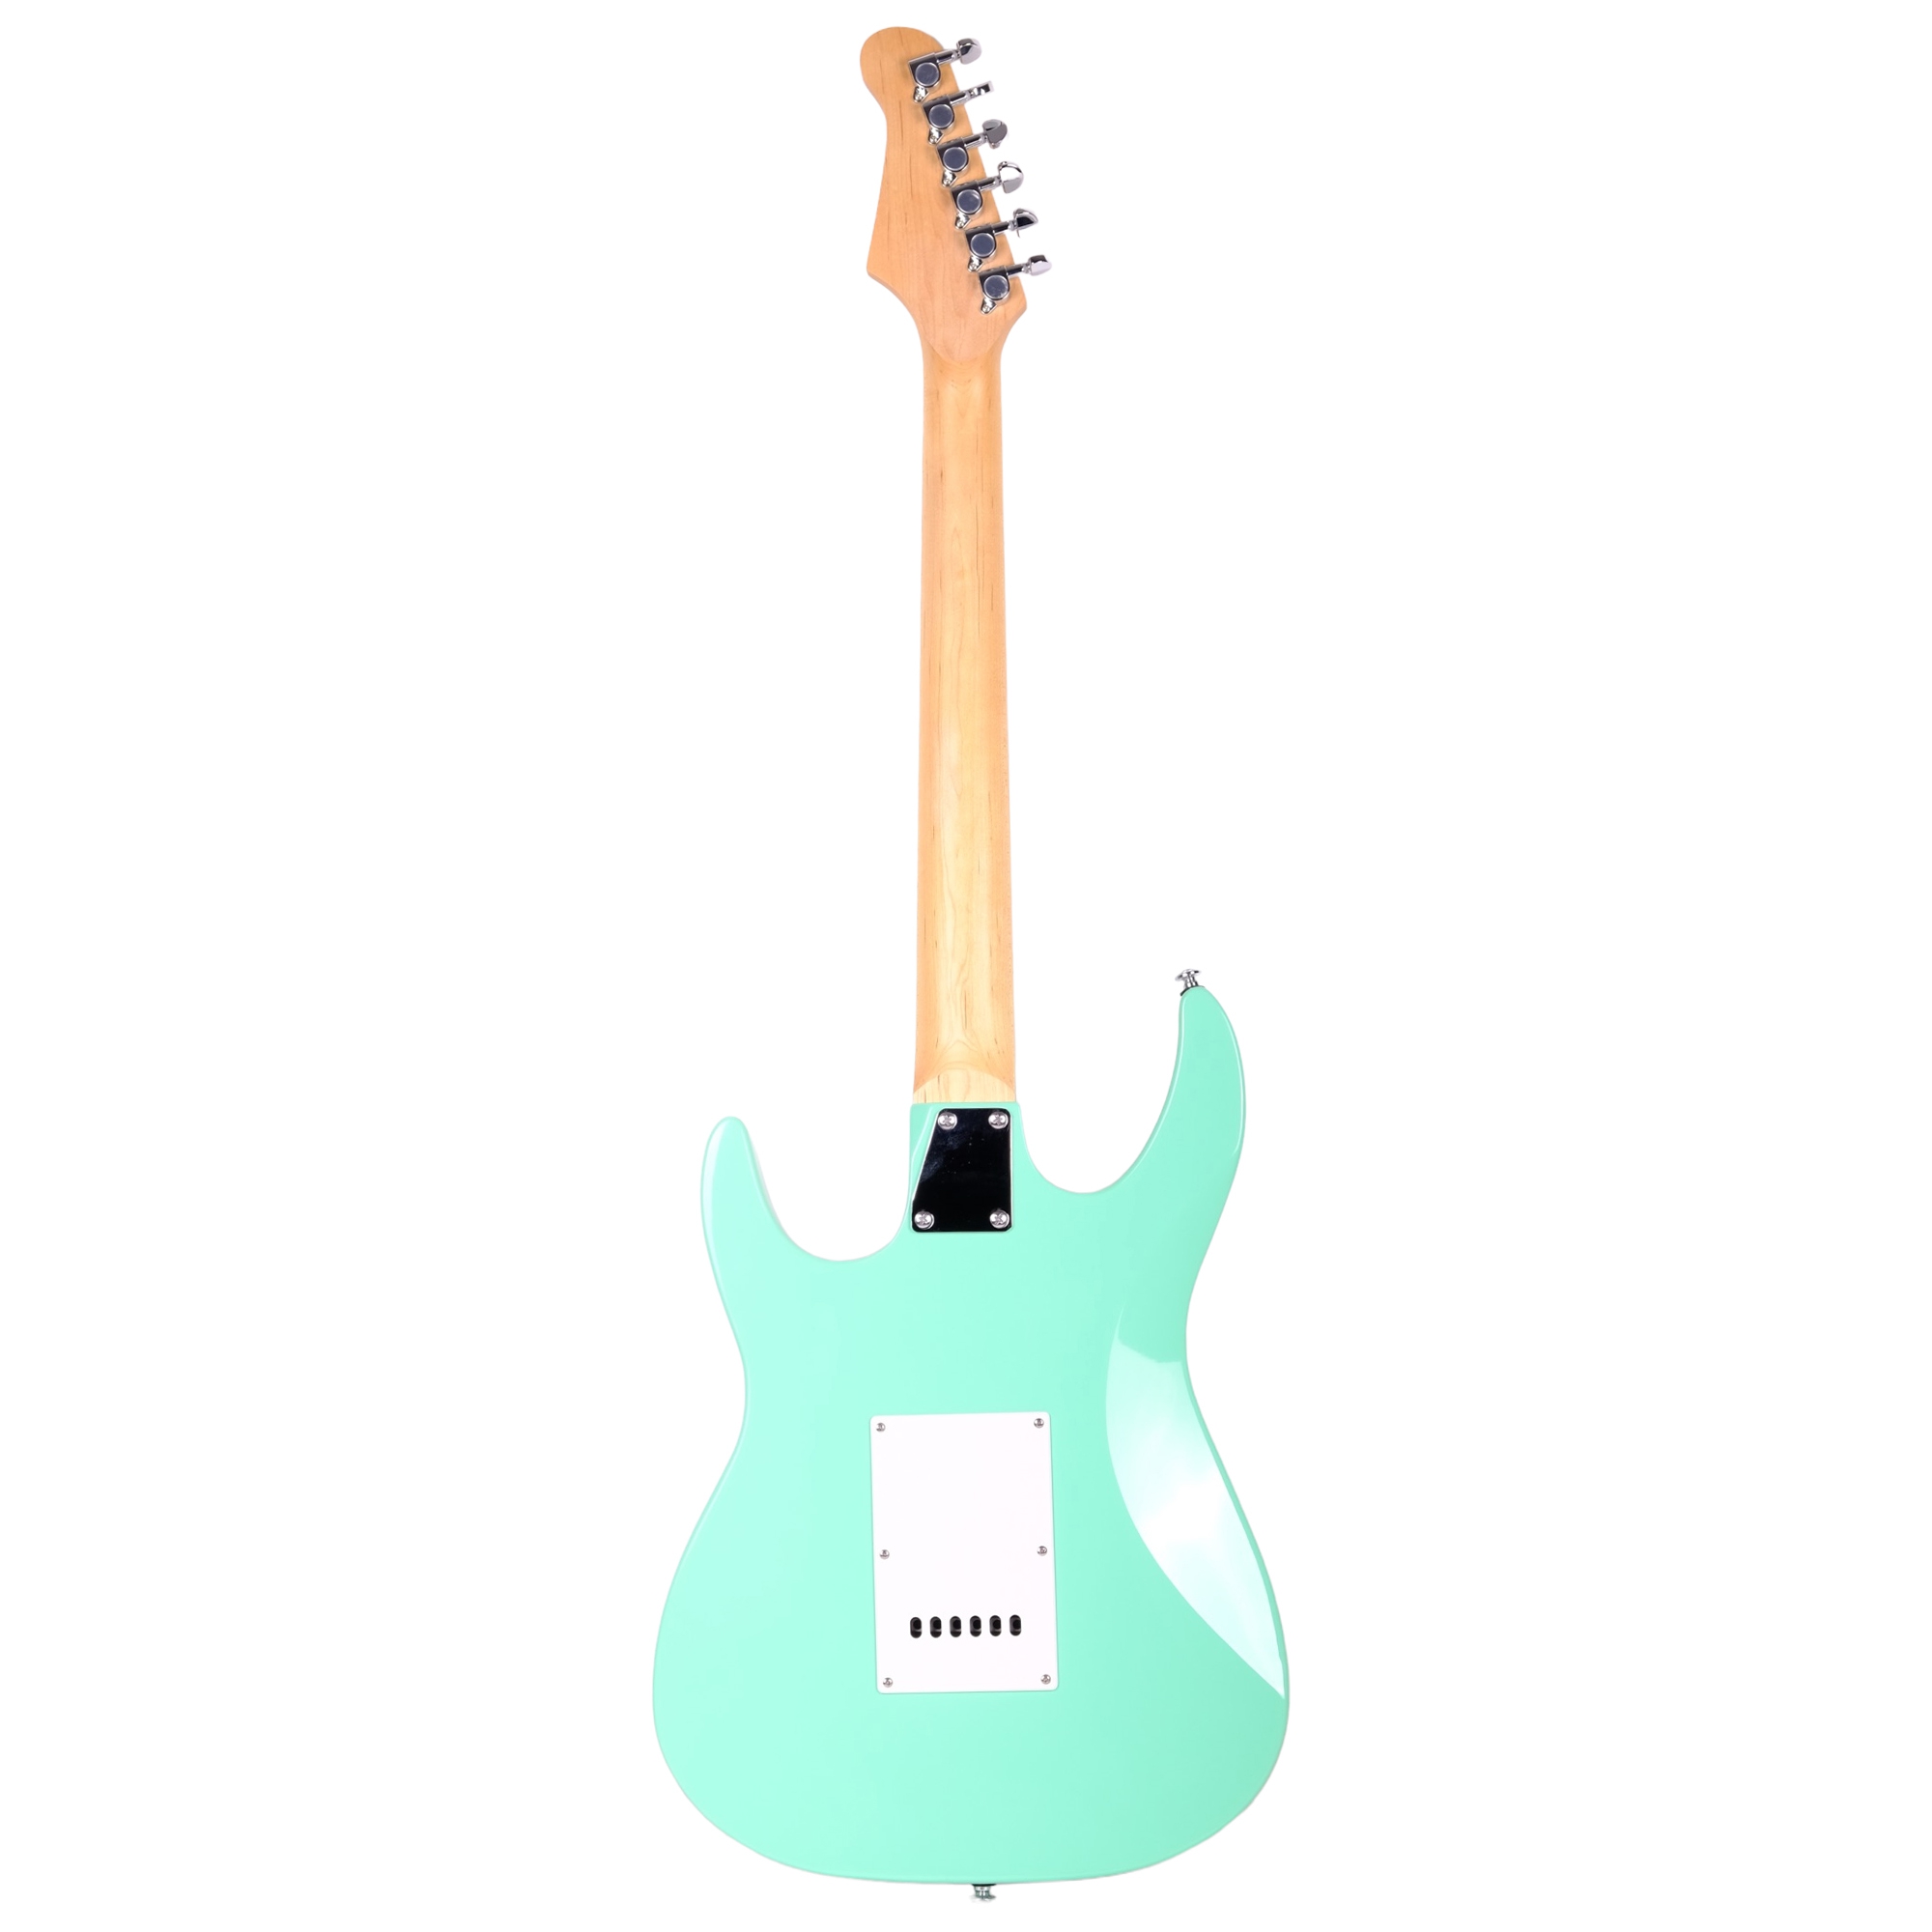 Fenix FSS-10MSGR Elektro Gitar (Yeşil)